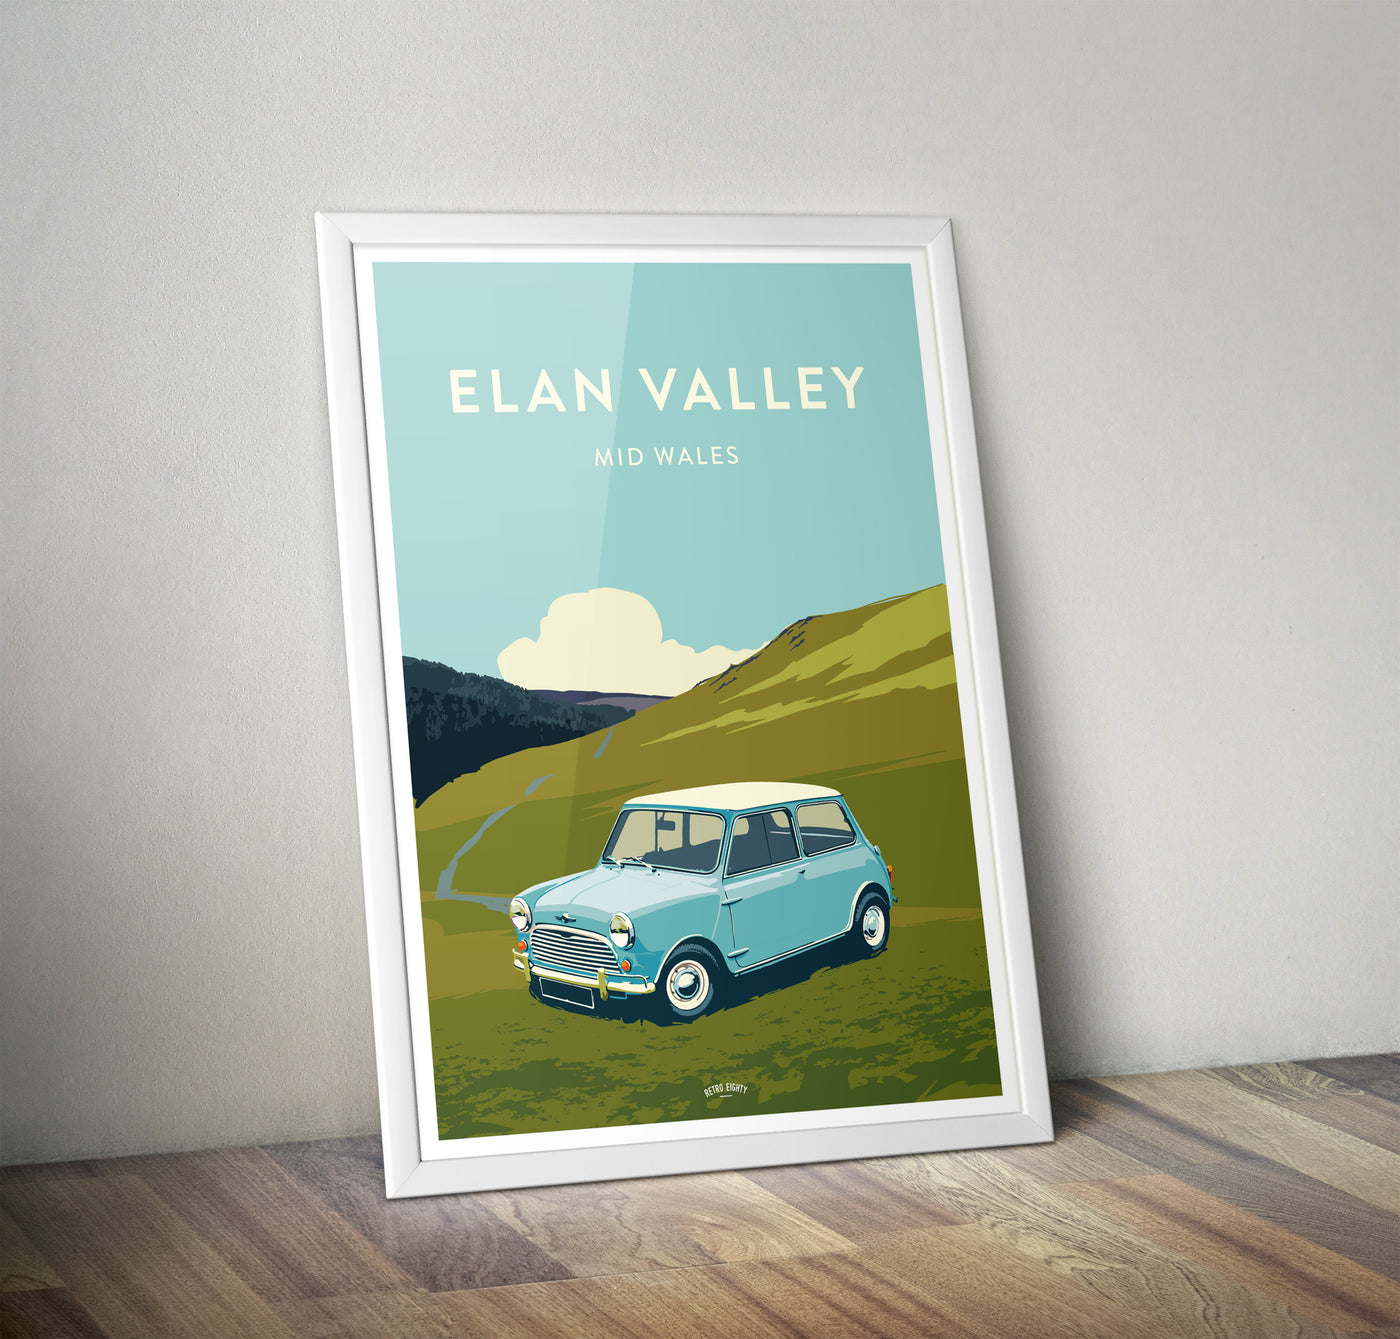 'Elan Valley' Mini Prints